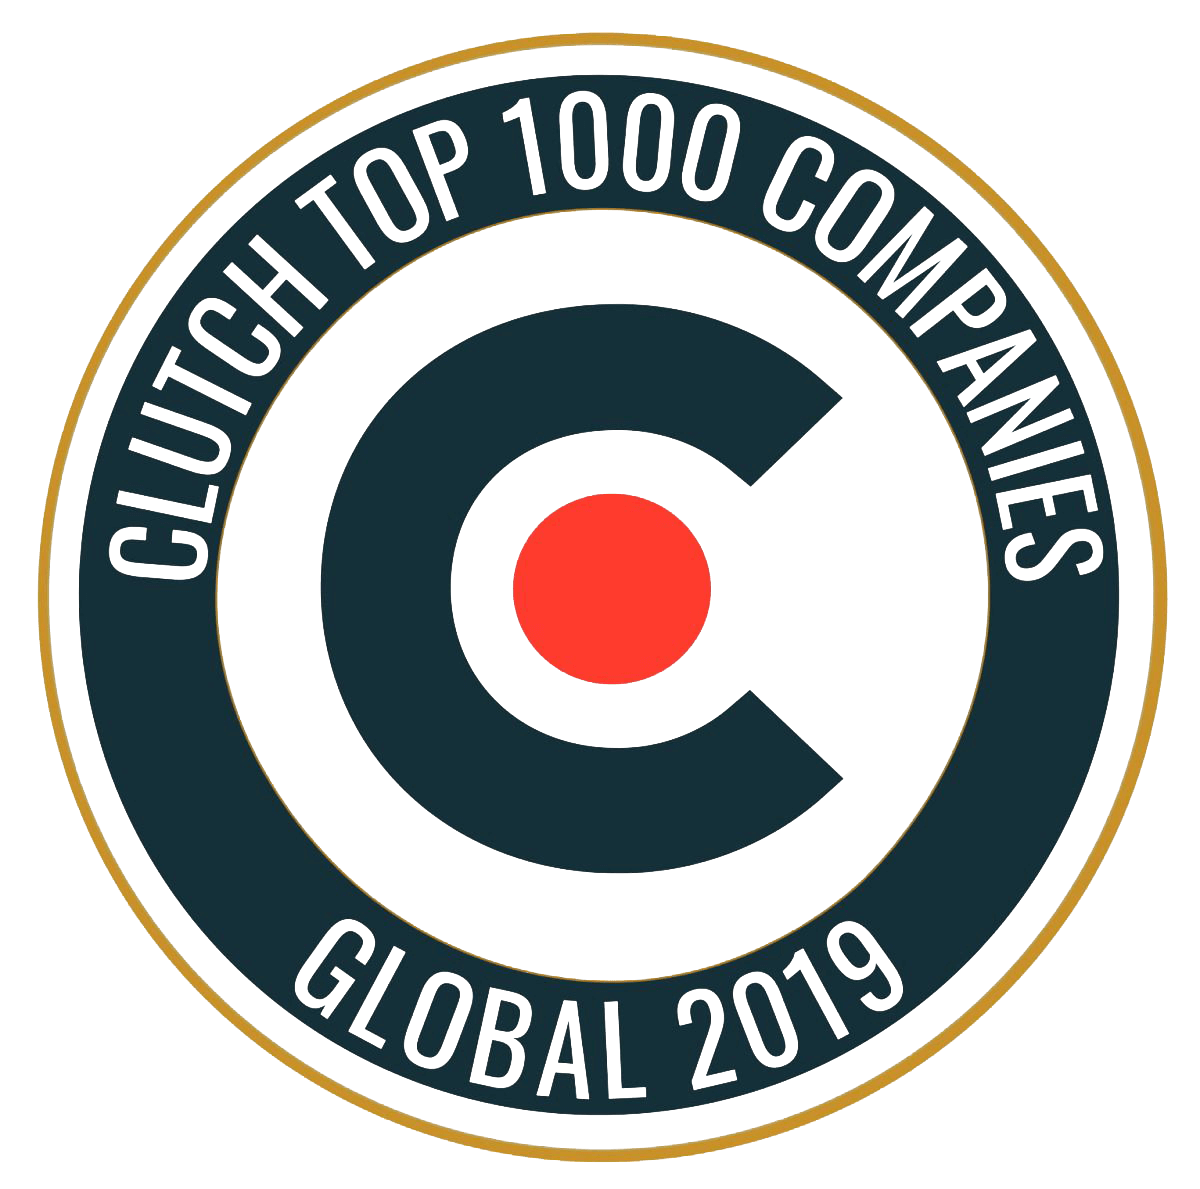 JCommerce at the Clutch Top 1000 Companies Global 2019 list